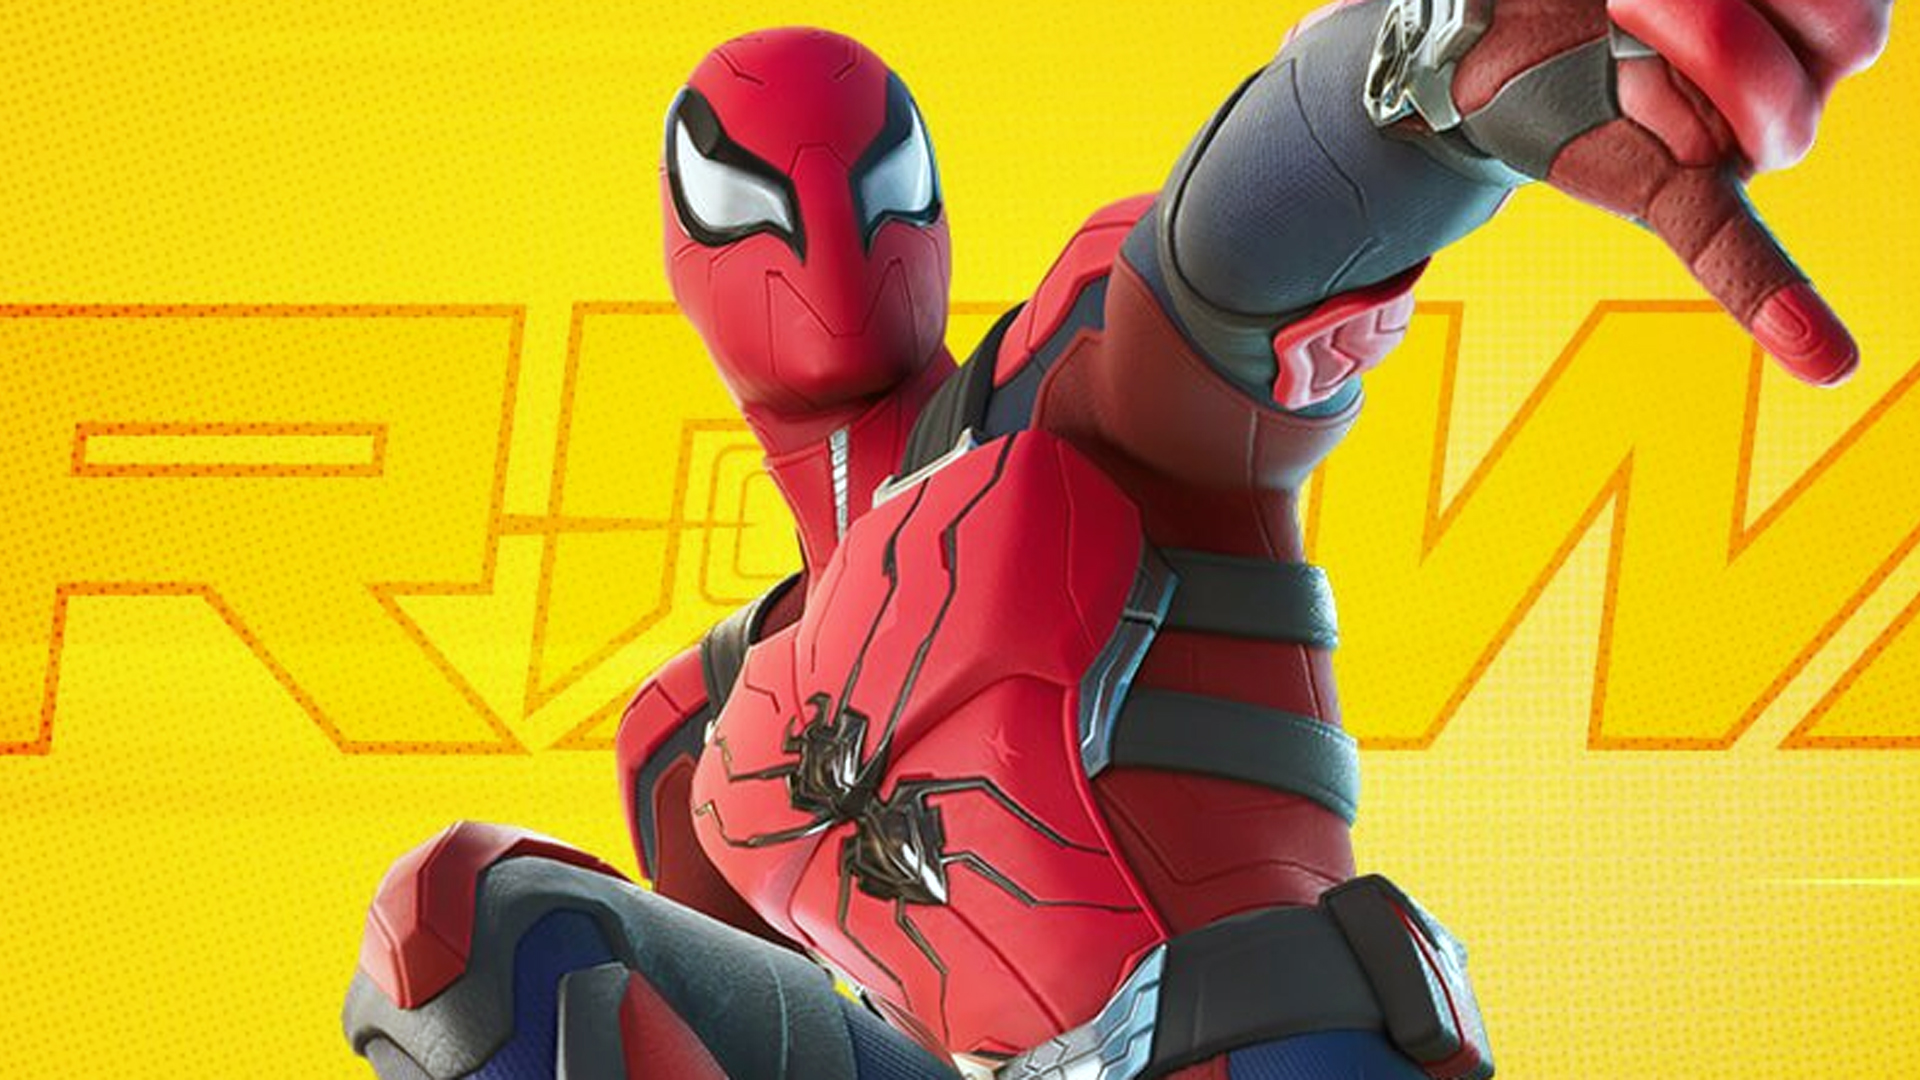 Fortnite is getting an original Spider-Man Marvel skin